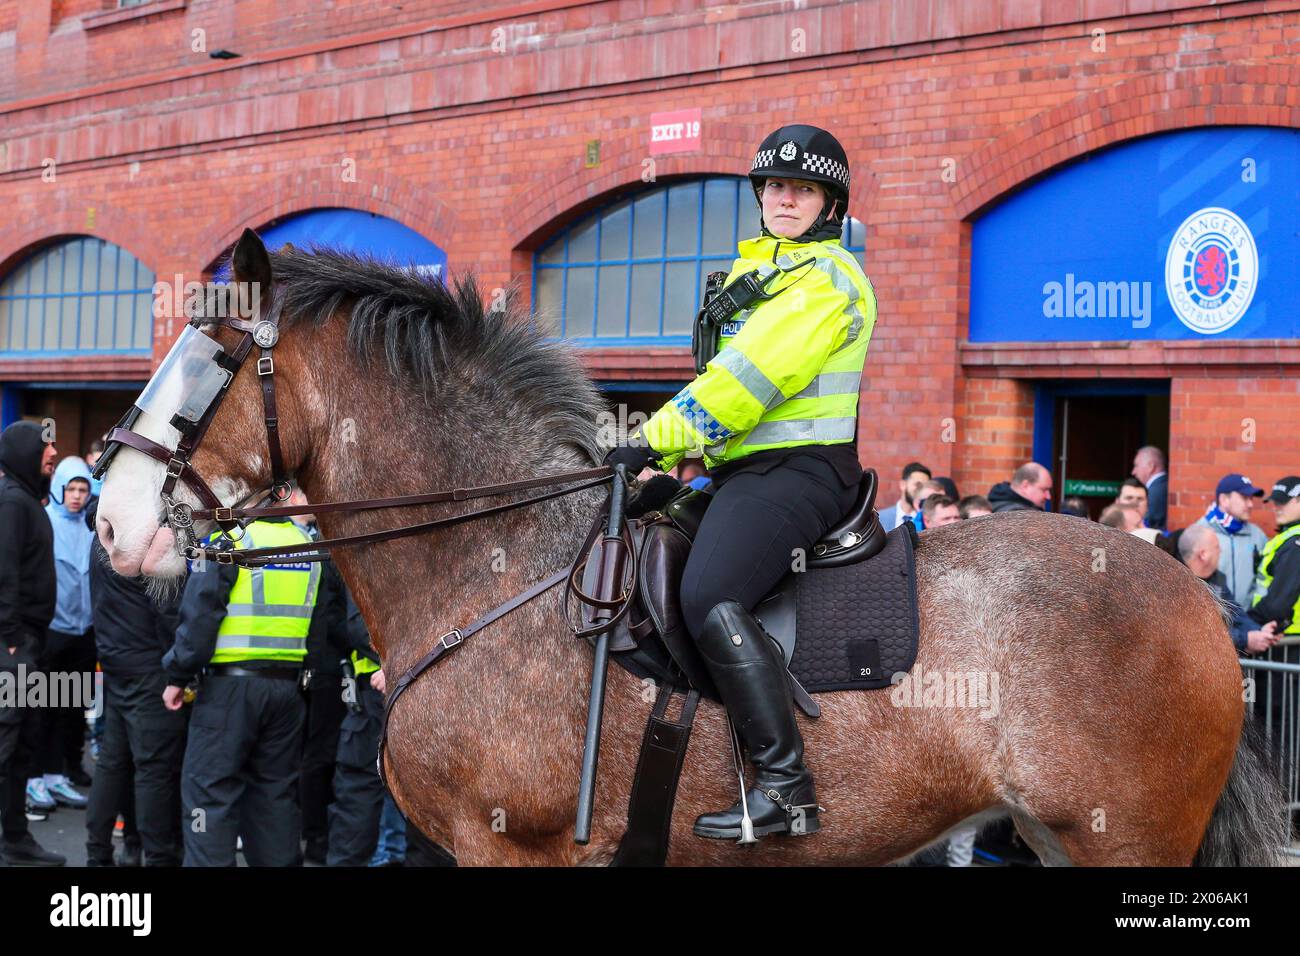 Mounted police officer, on duty at Ibrox Stadium prior to a Scottish Premiership football match, Glasgow, Scotland, UK Stock Photo